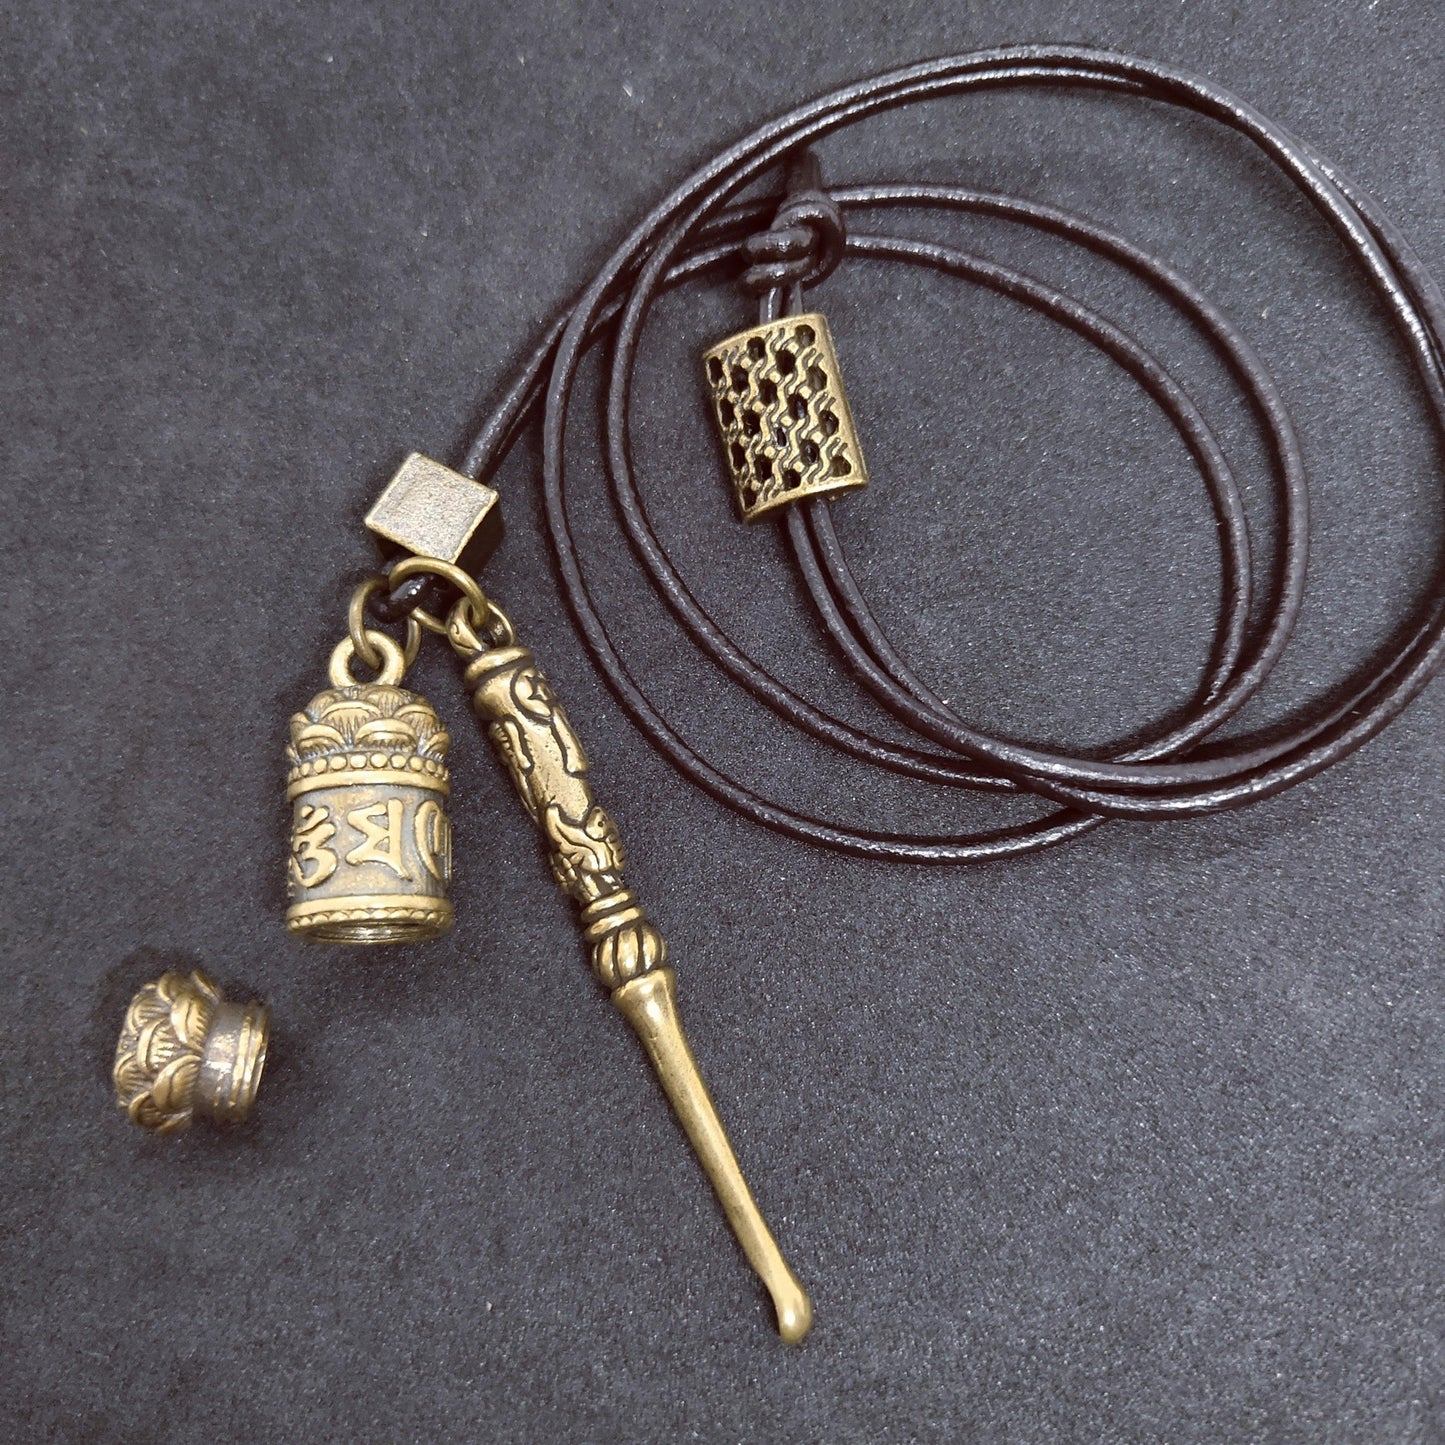 Mini Spoon with Brass Jar Pendants Necklaces - The Burner Shop